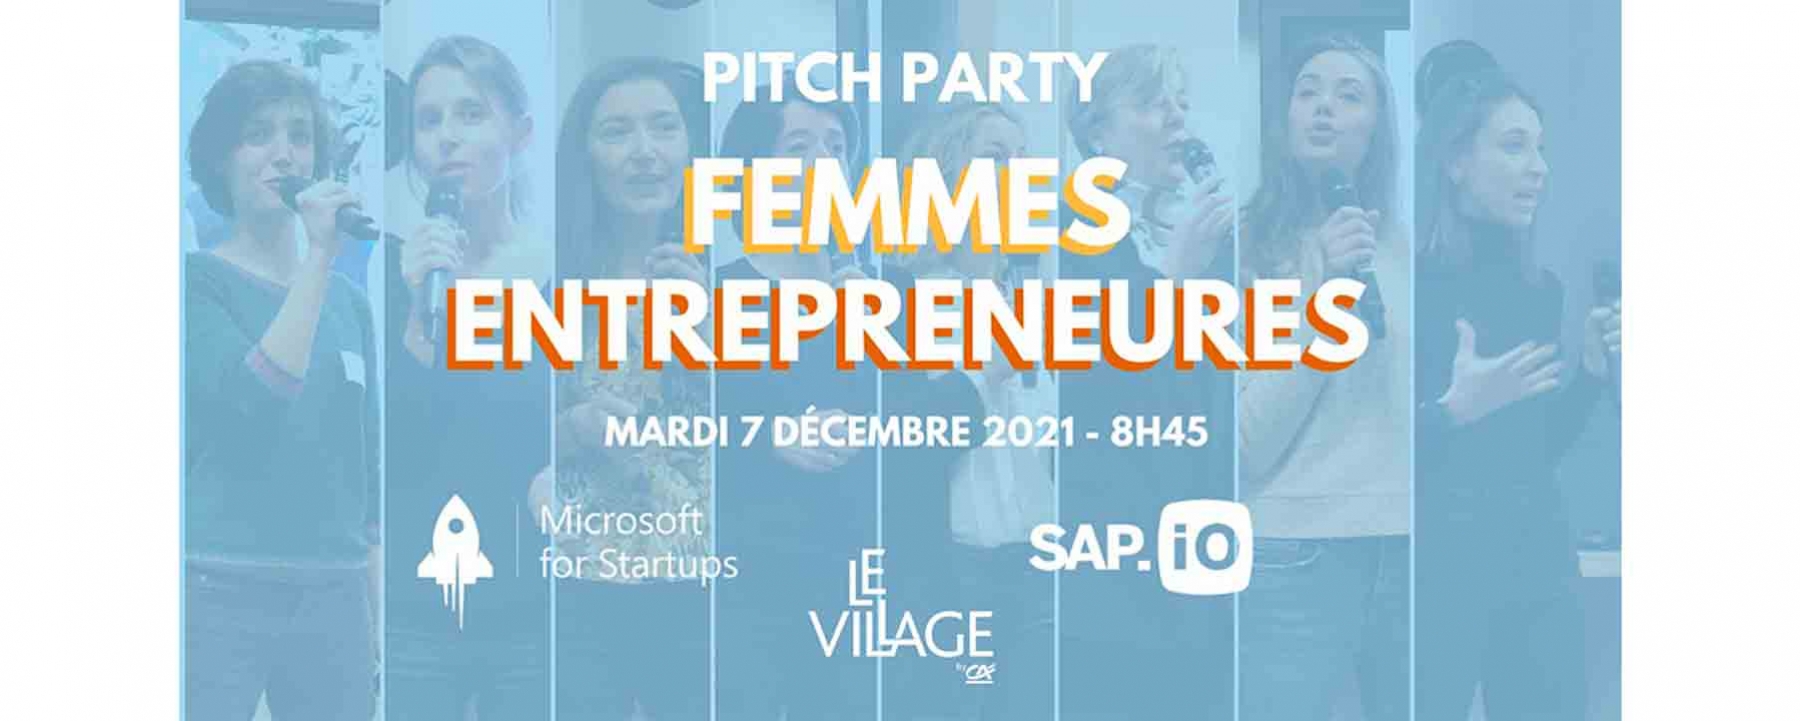 Pitch Party Femmes Entrepreneures